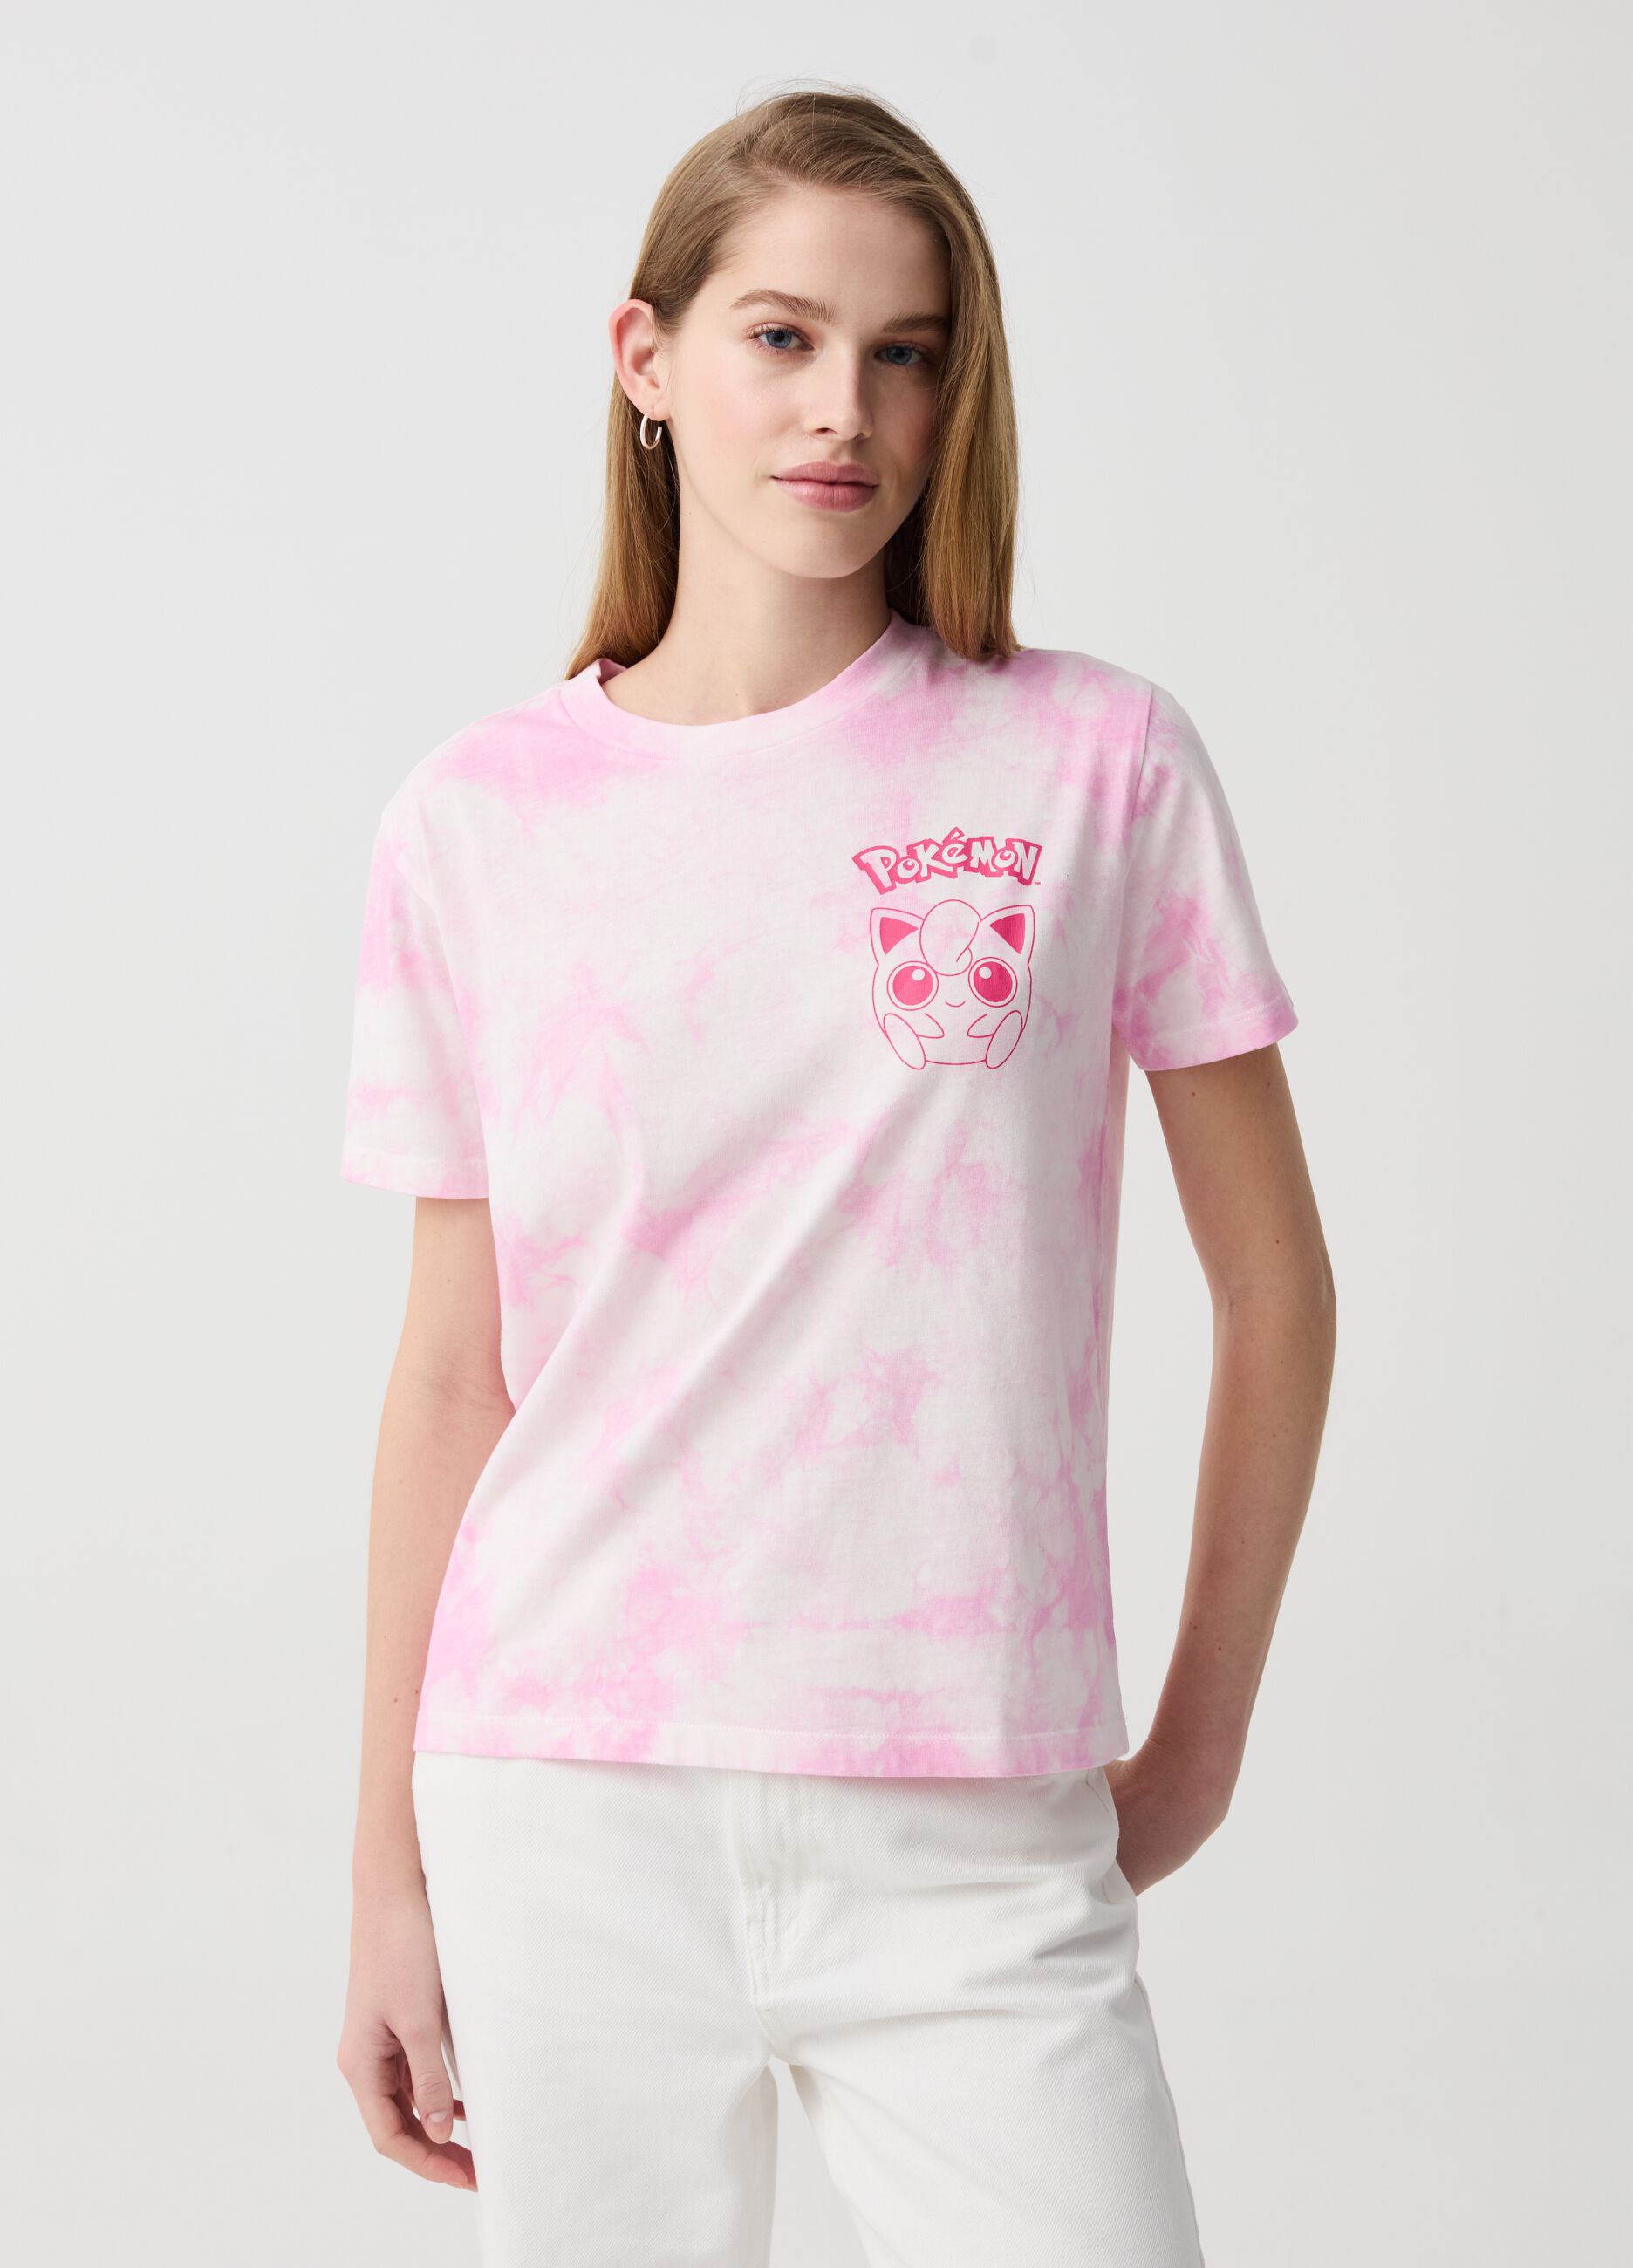 Tie-dye T-shirt with Jigglypuff print